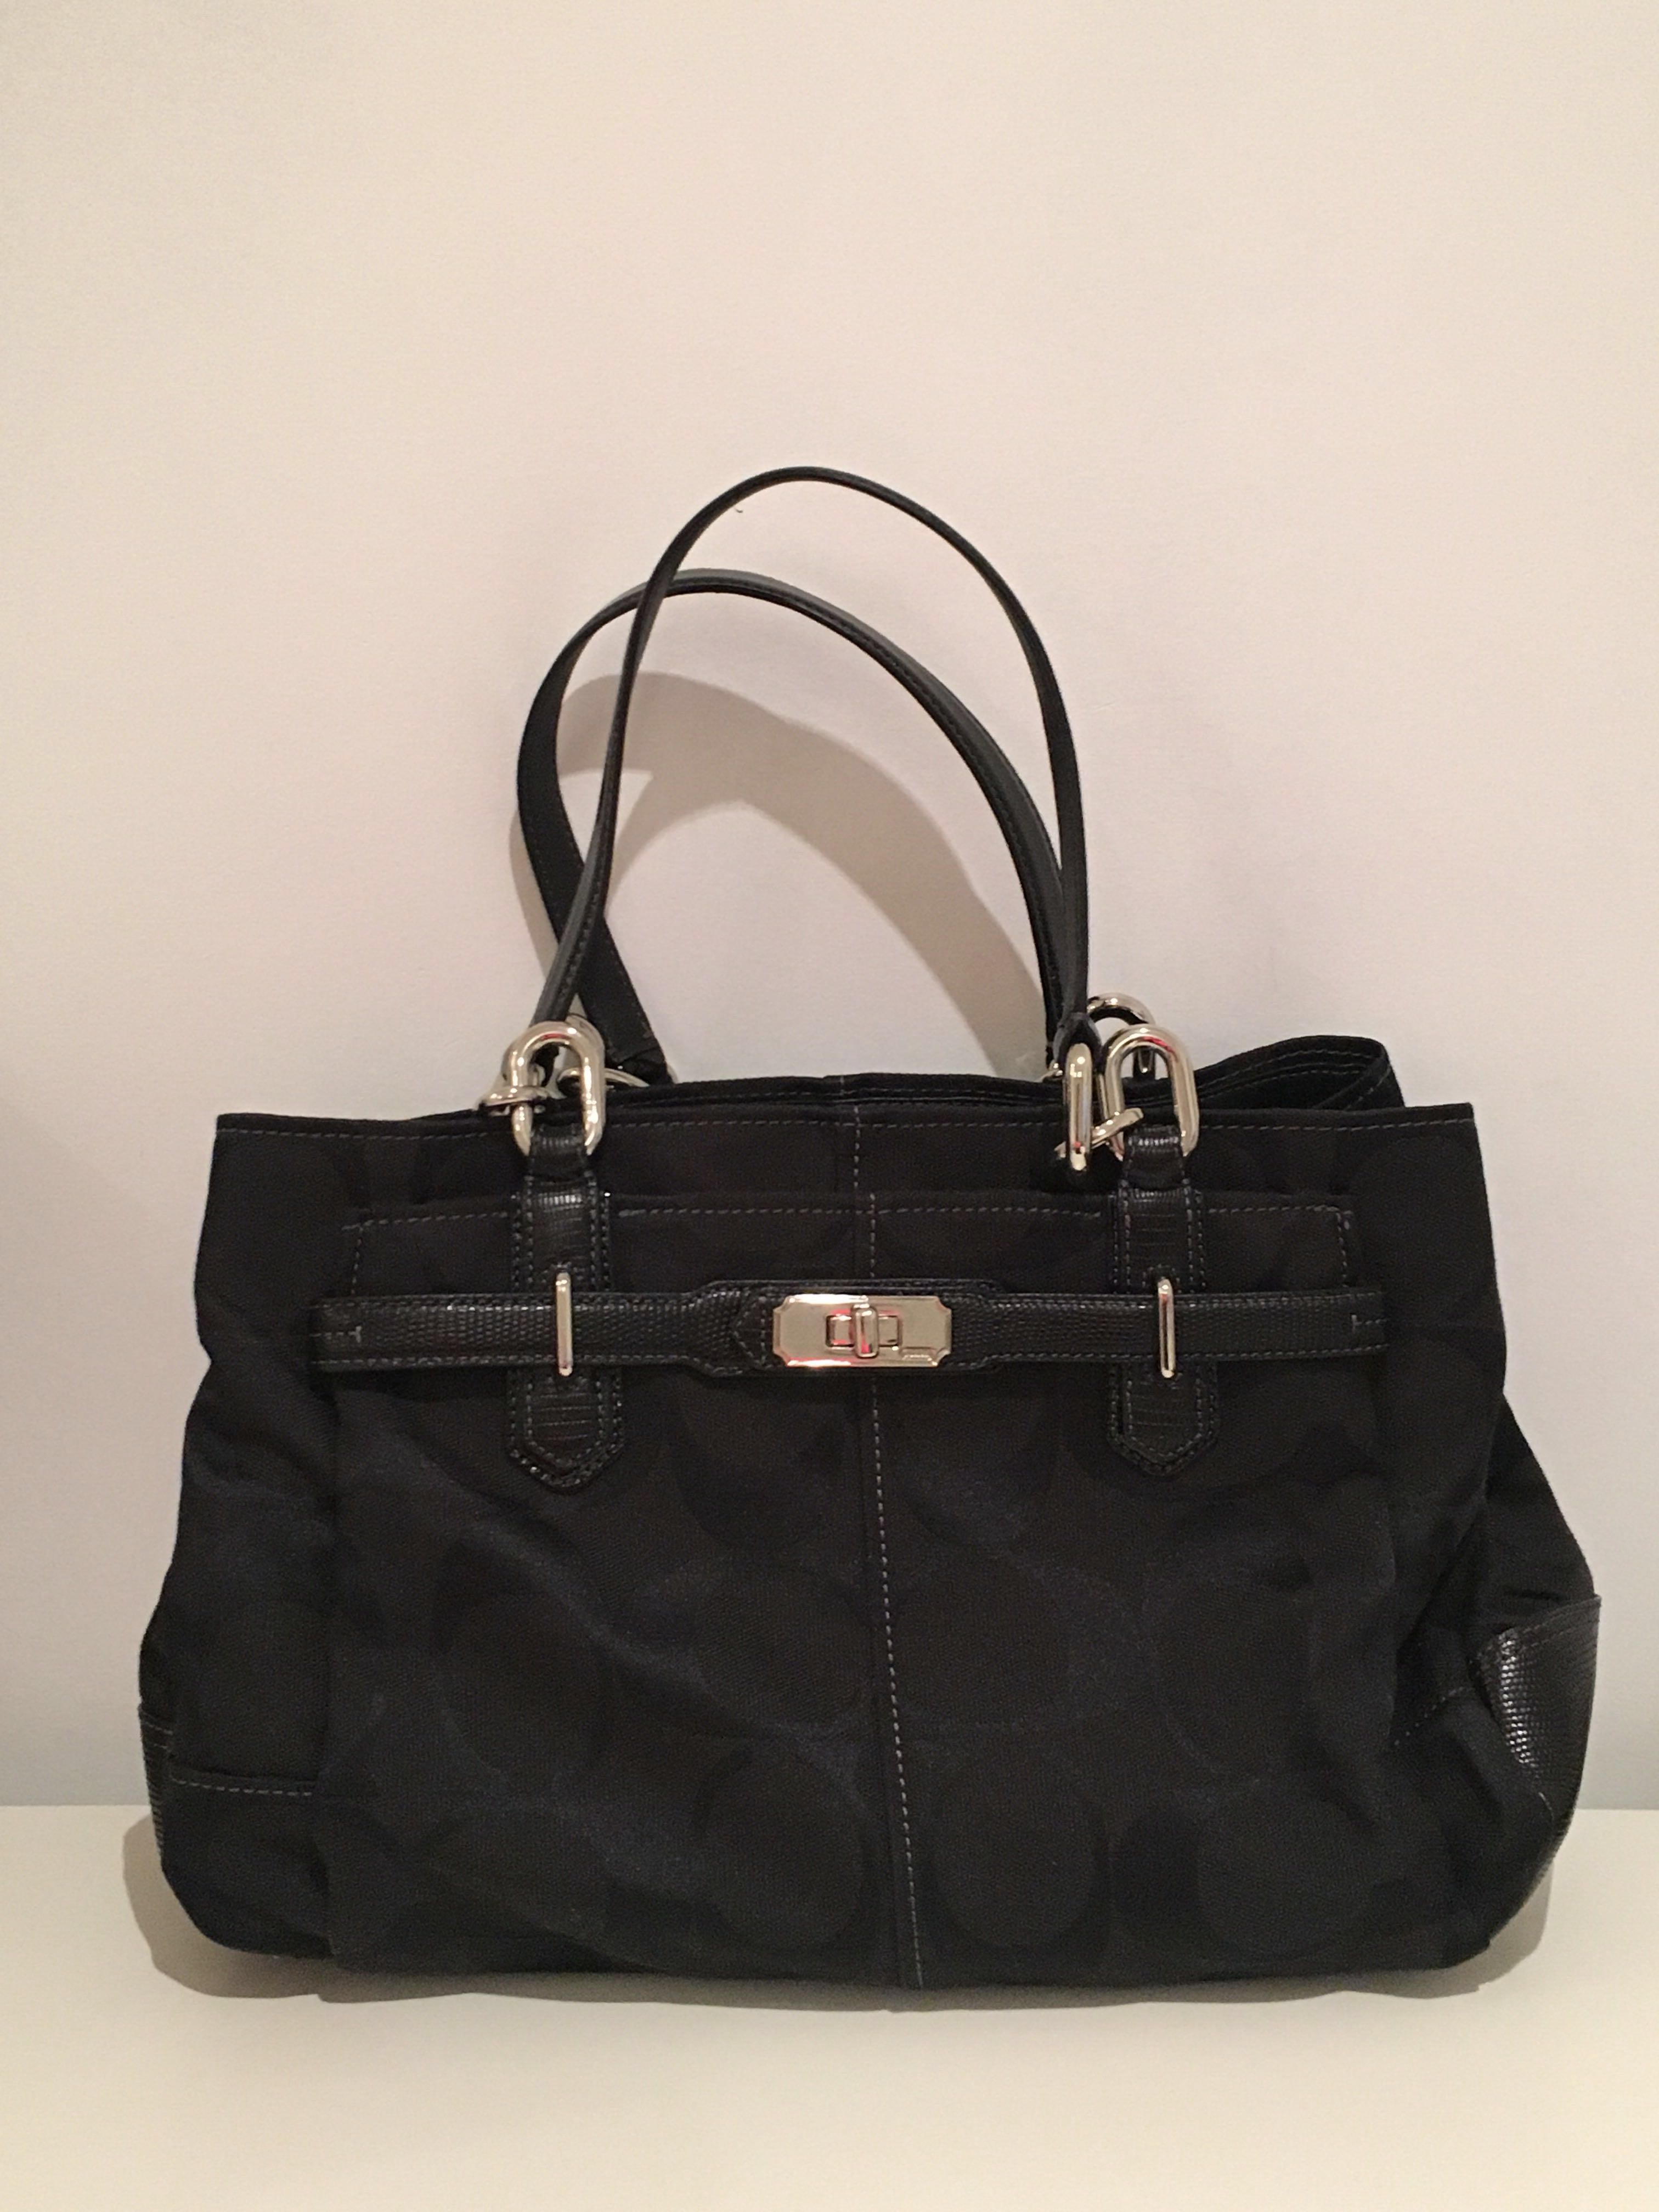 COACH black purse